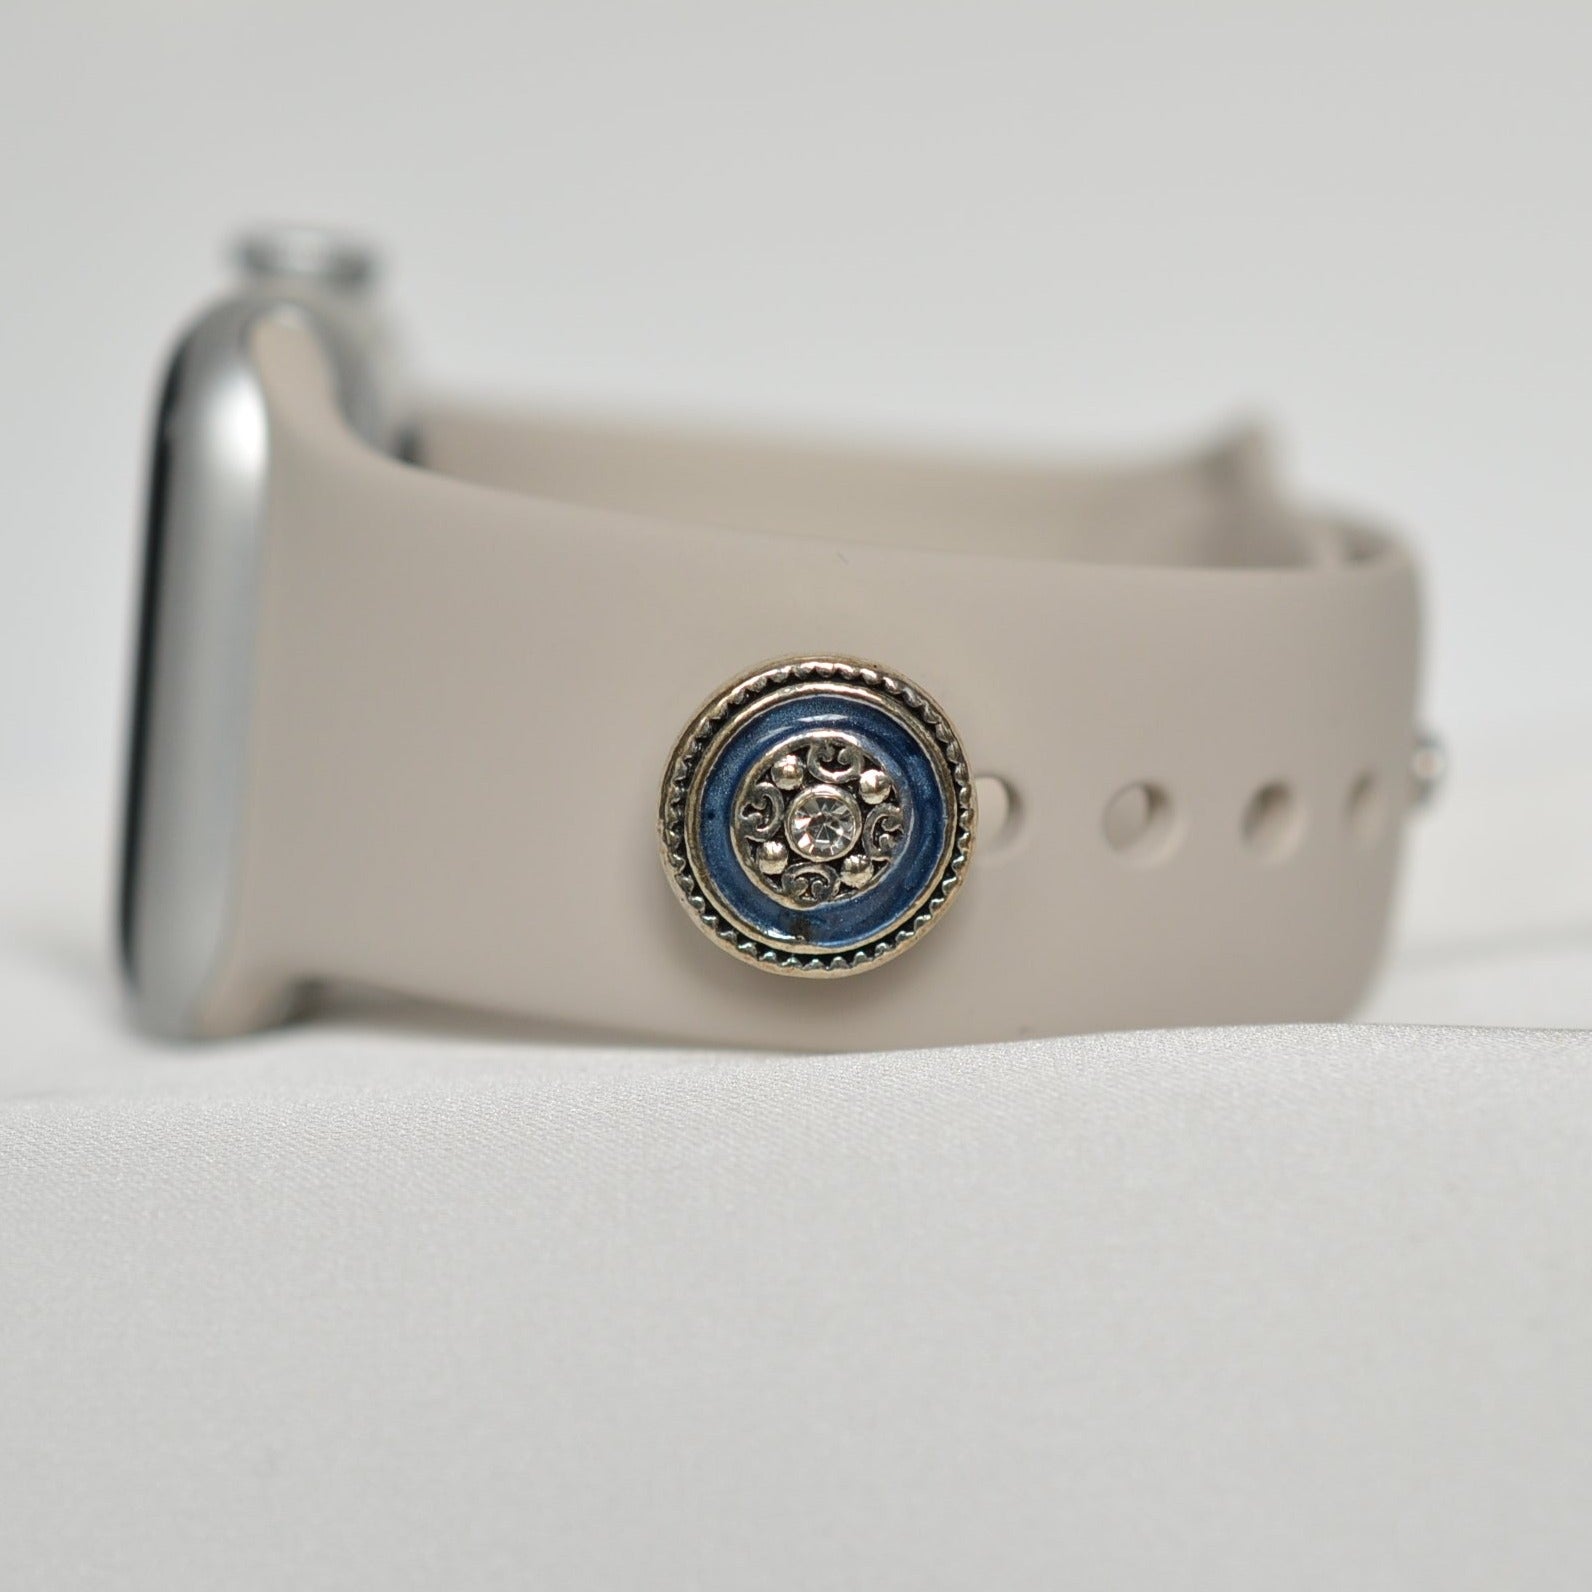 Dark Blue Design Charm for Belt, Bag and Watch Bands